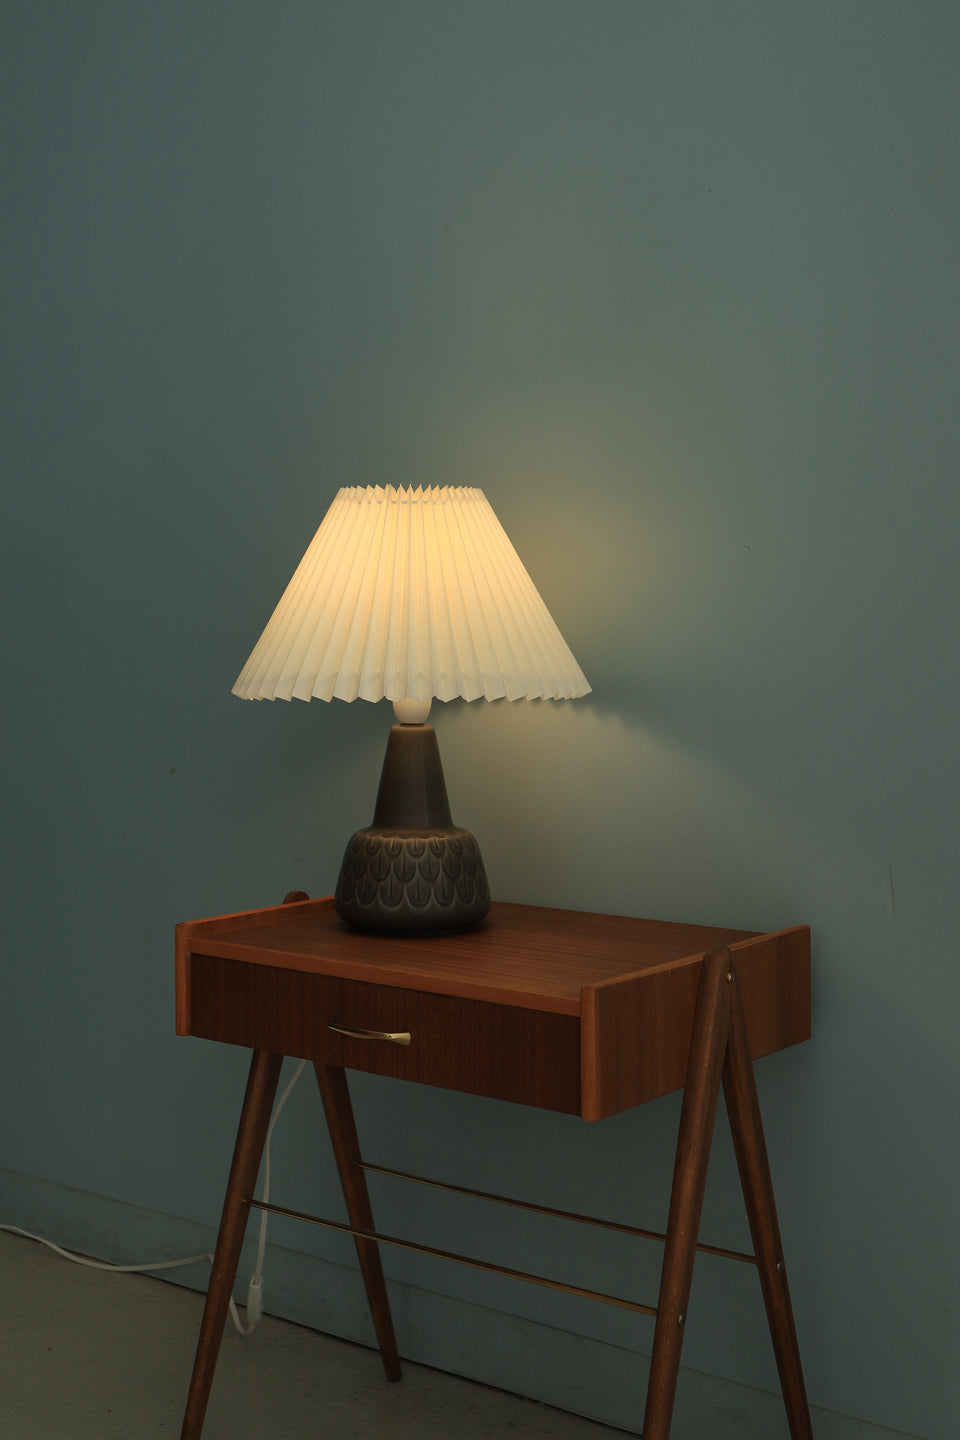 Danish Vintage Søholm Table Lamp Model 1015 Einar Johansen/スーホルム テーブルランプ エイナー・ヨハンセン 間接照明 北欧インテリア デンマークヴィンテージ